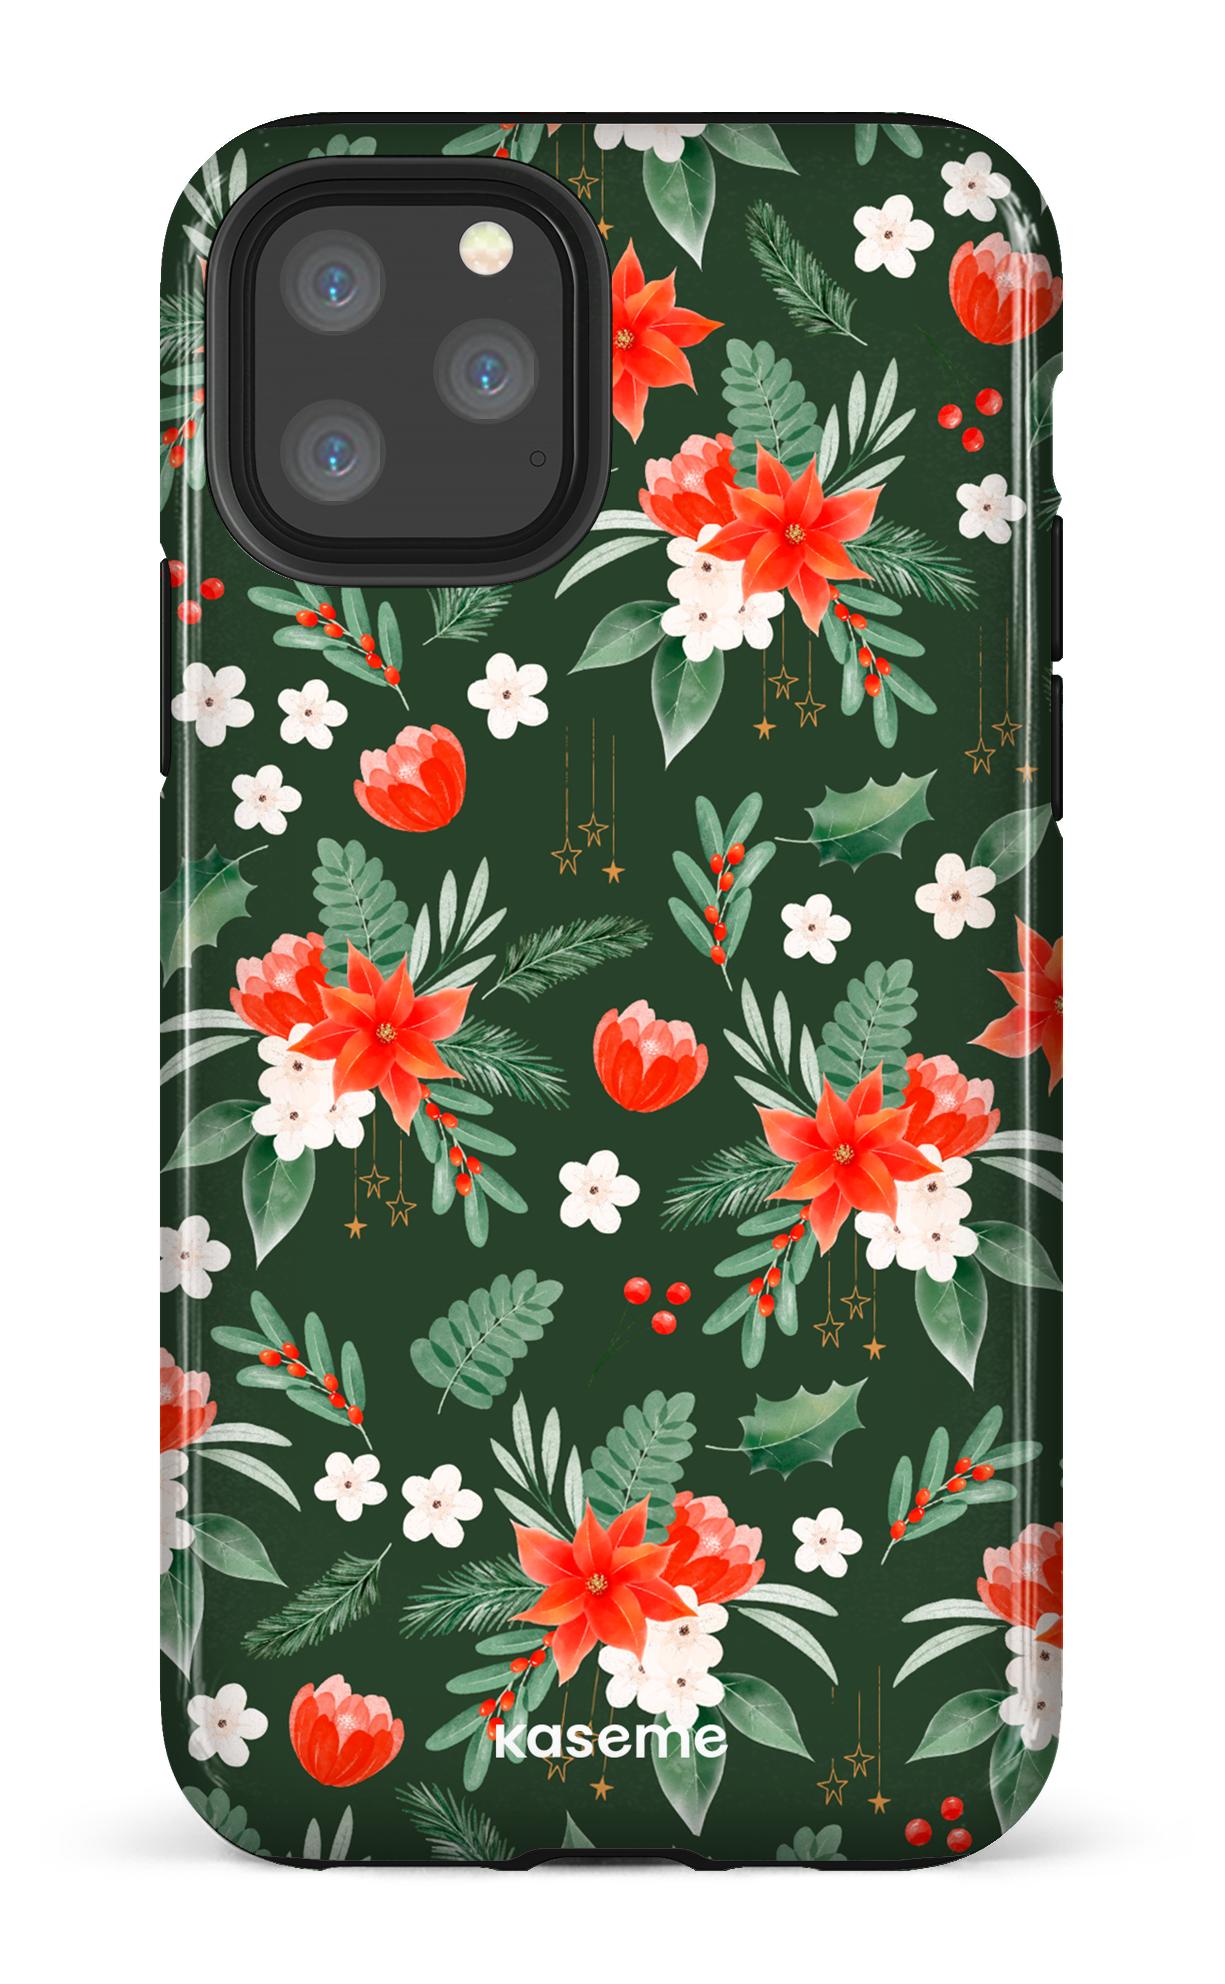 Poinsettia - iPhone 11 Pro